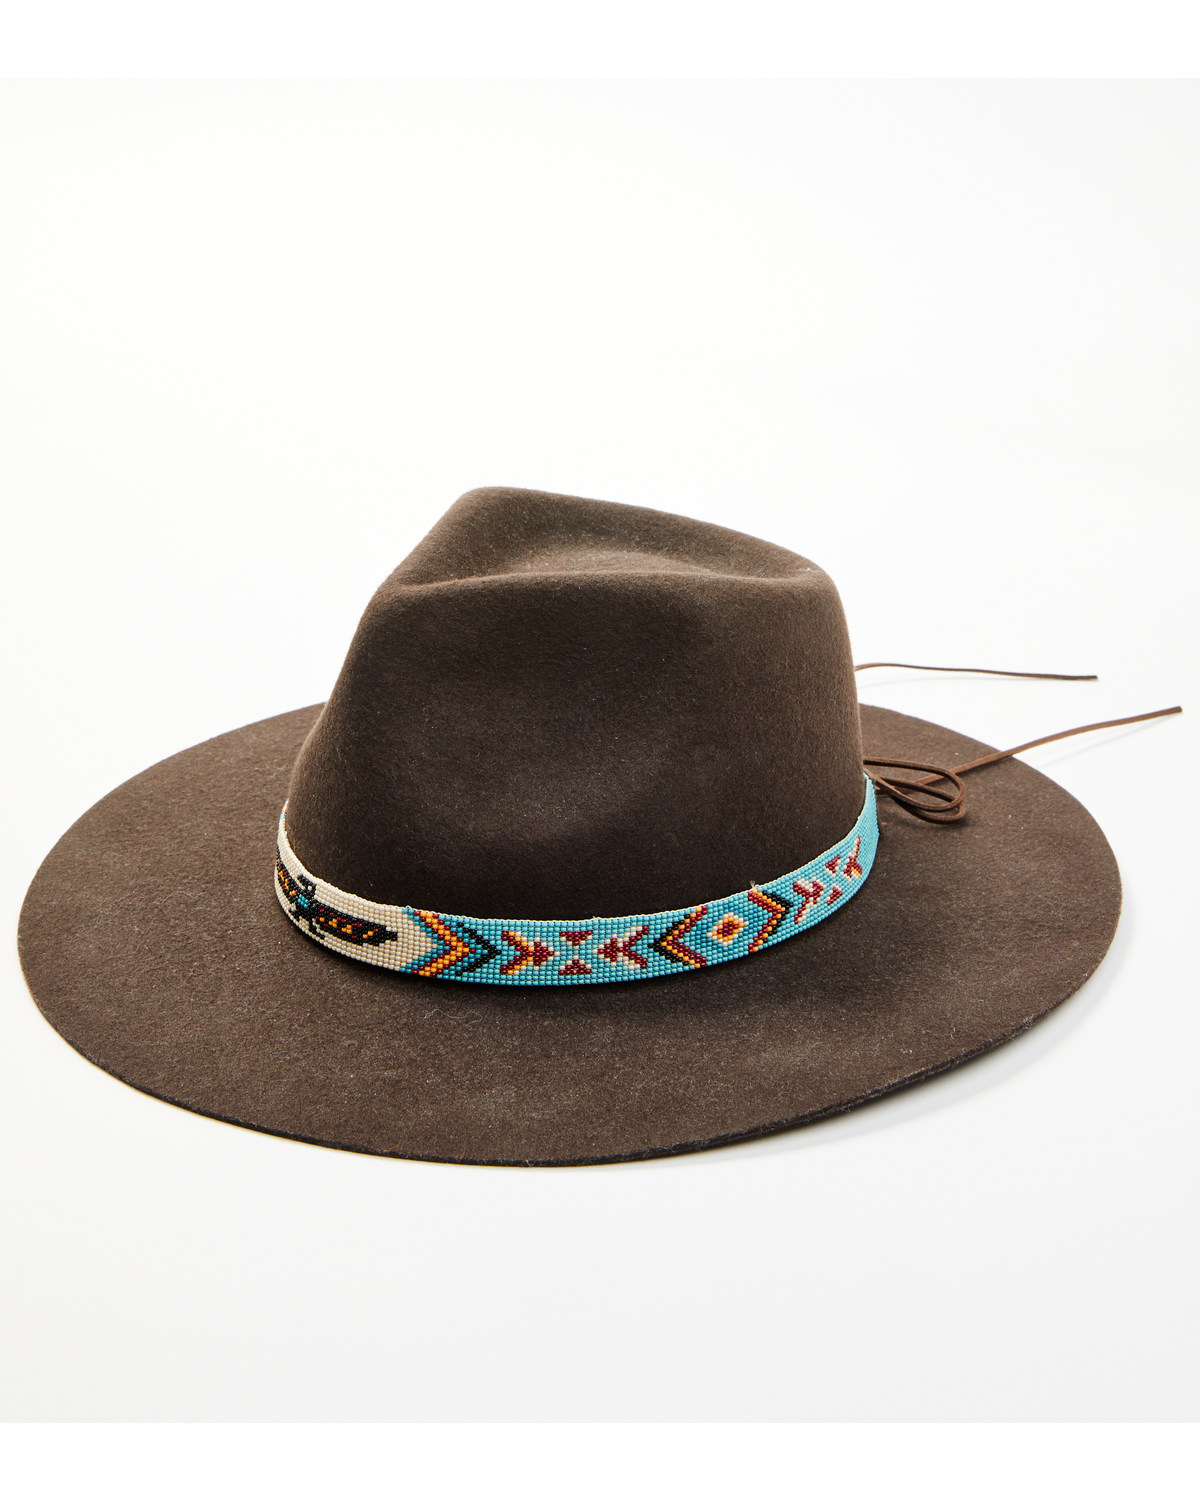 Idyllwind Women's Thunderbird Felt Western Fashion Hat